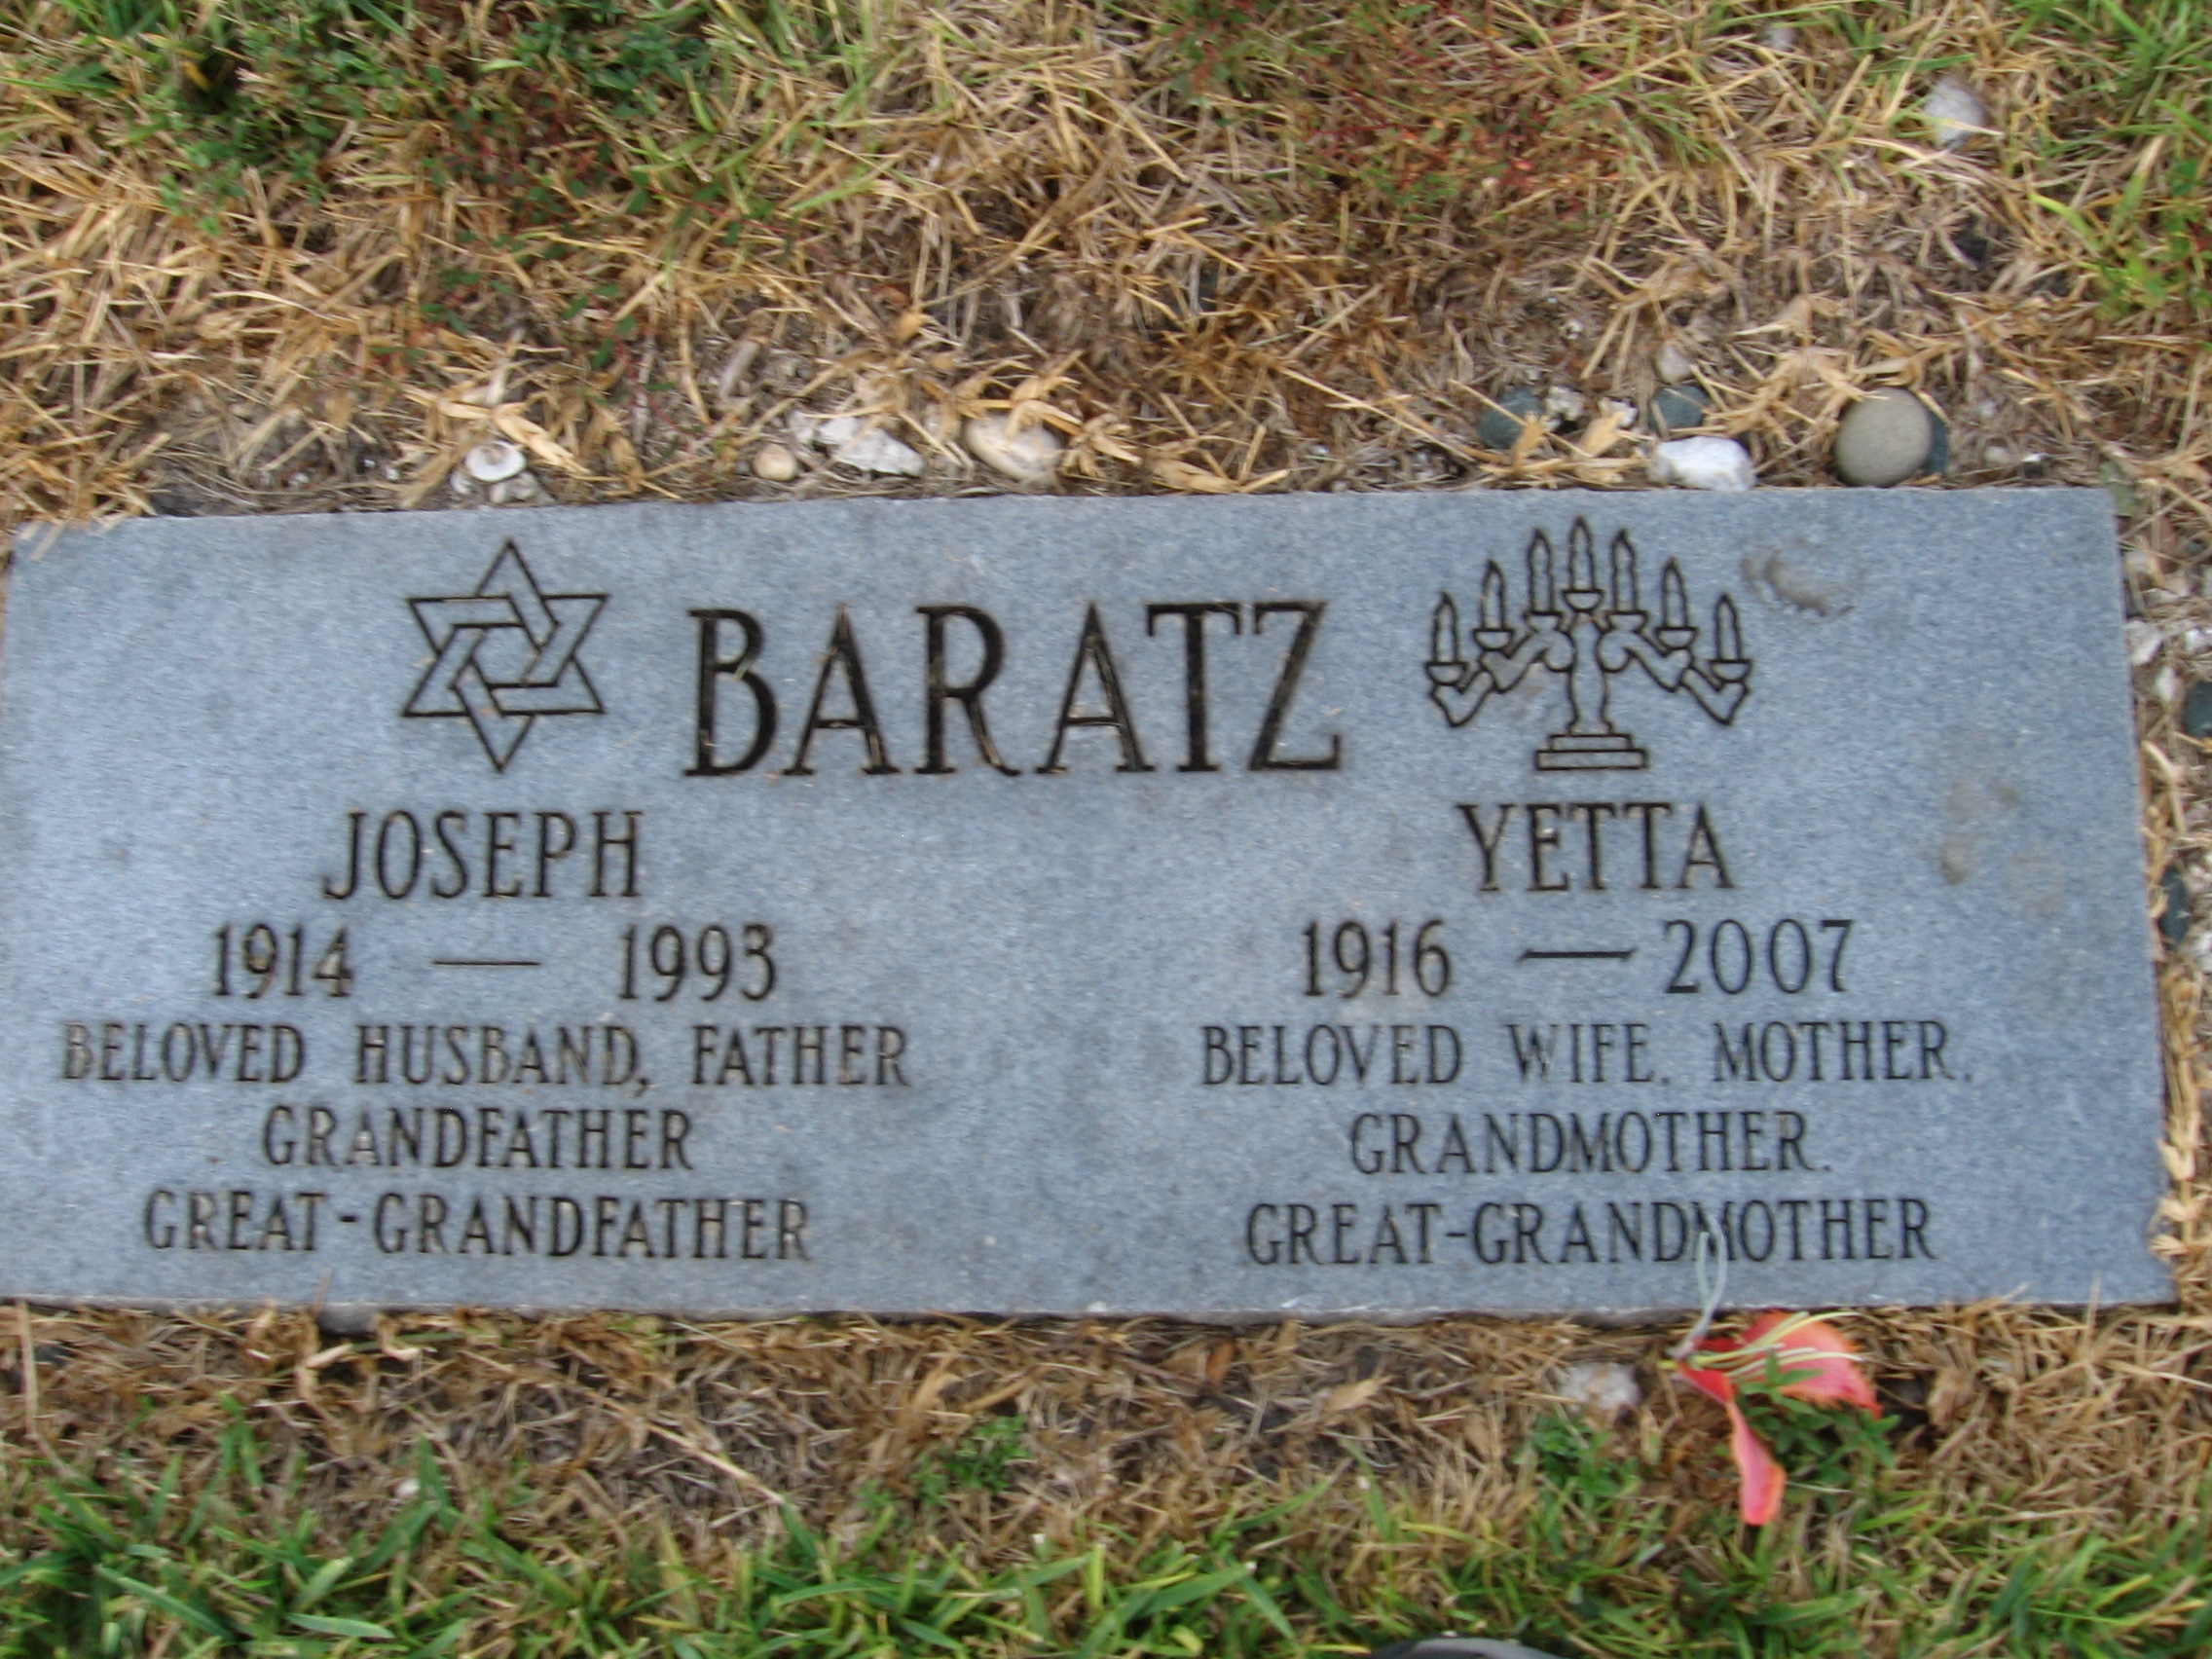 Joseph Baratz